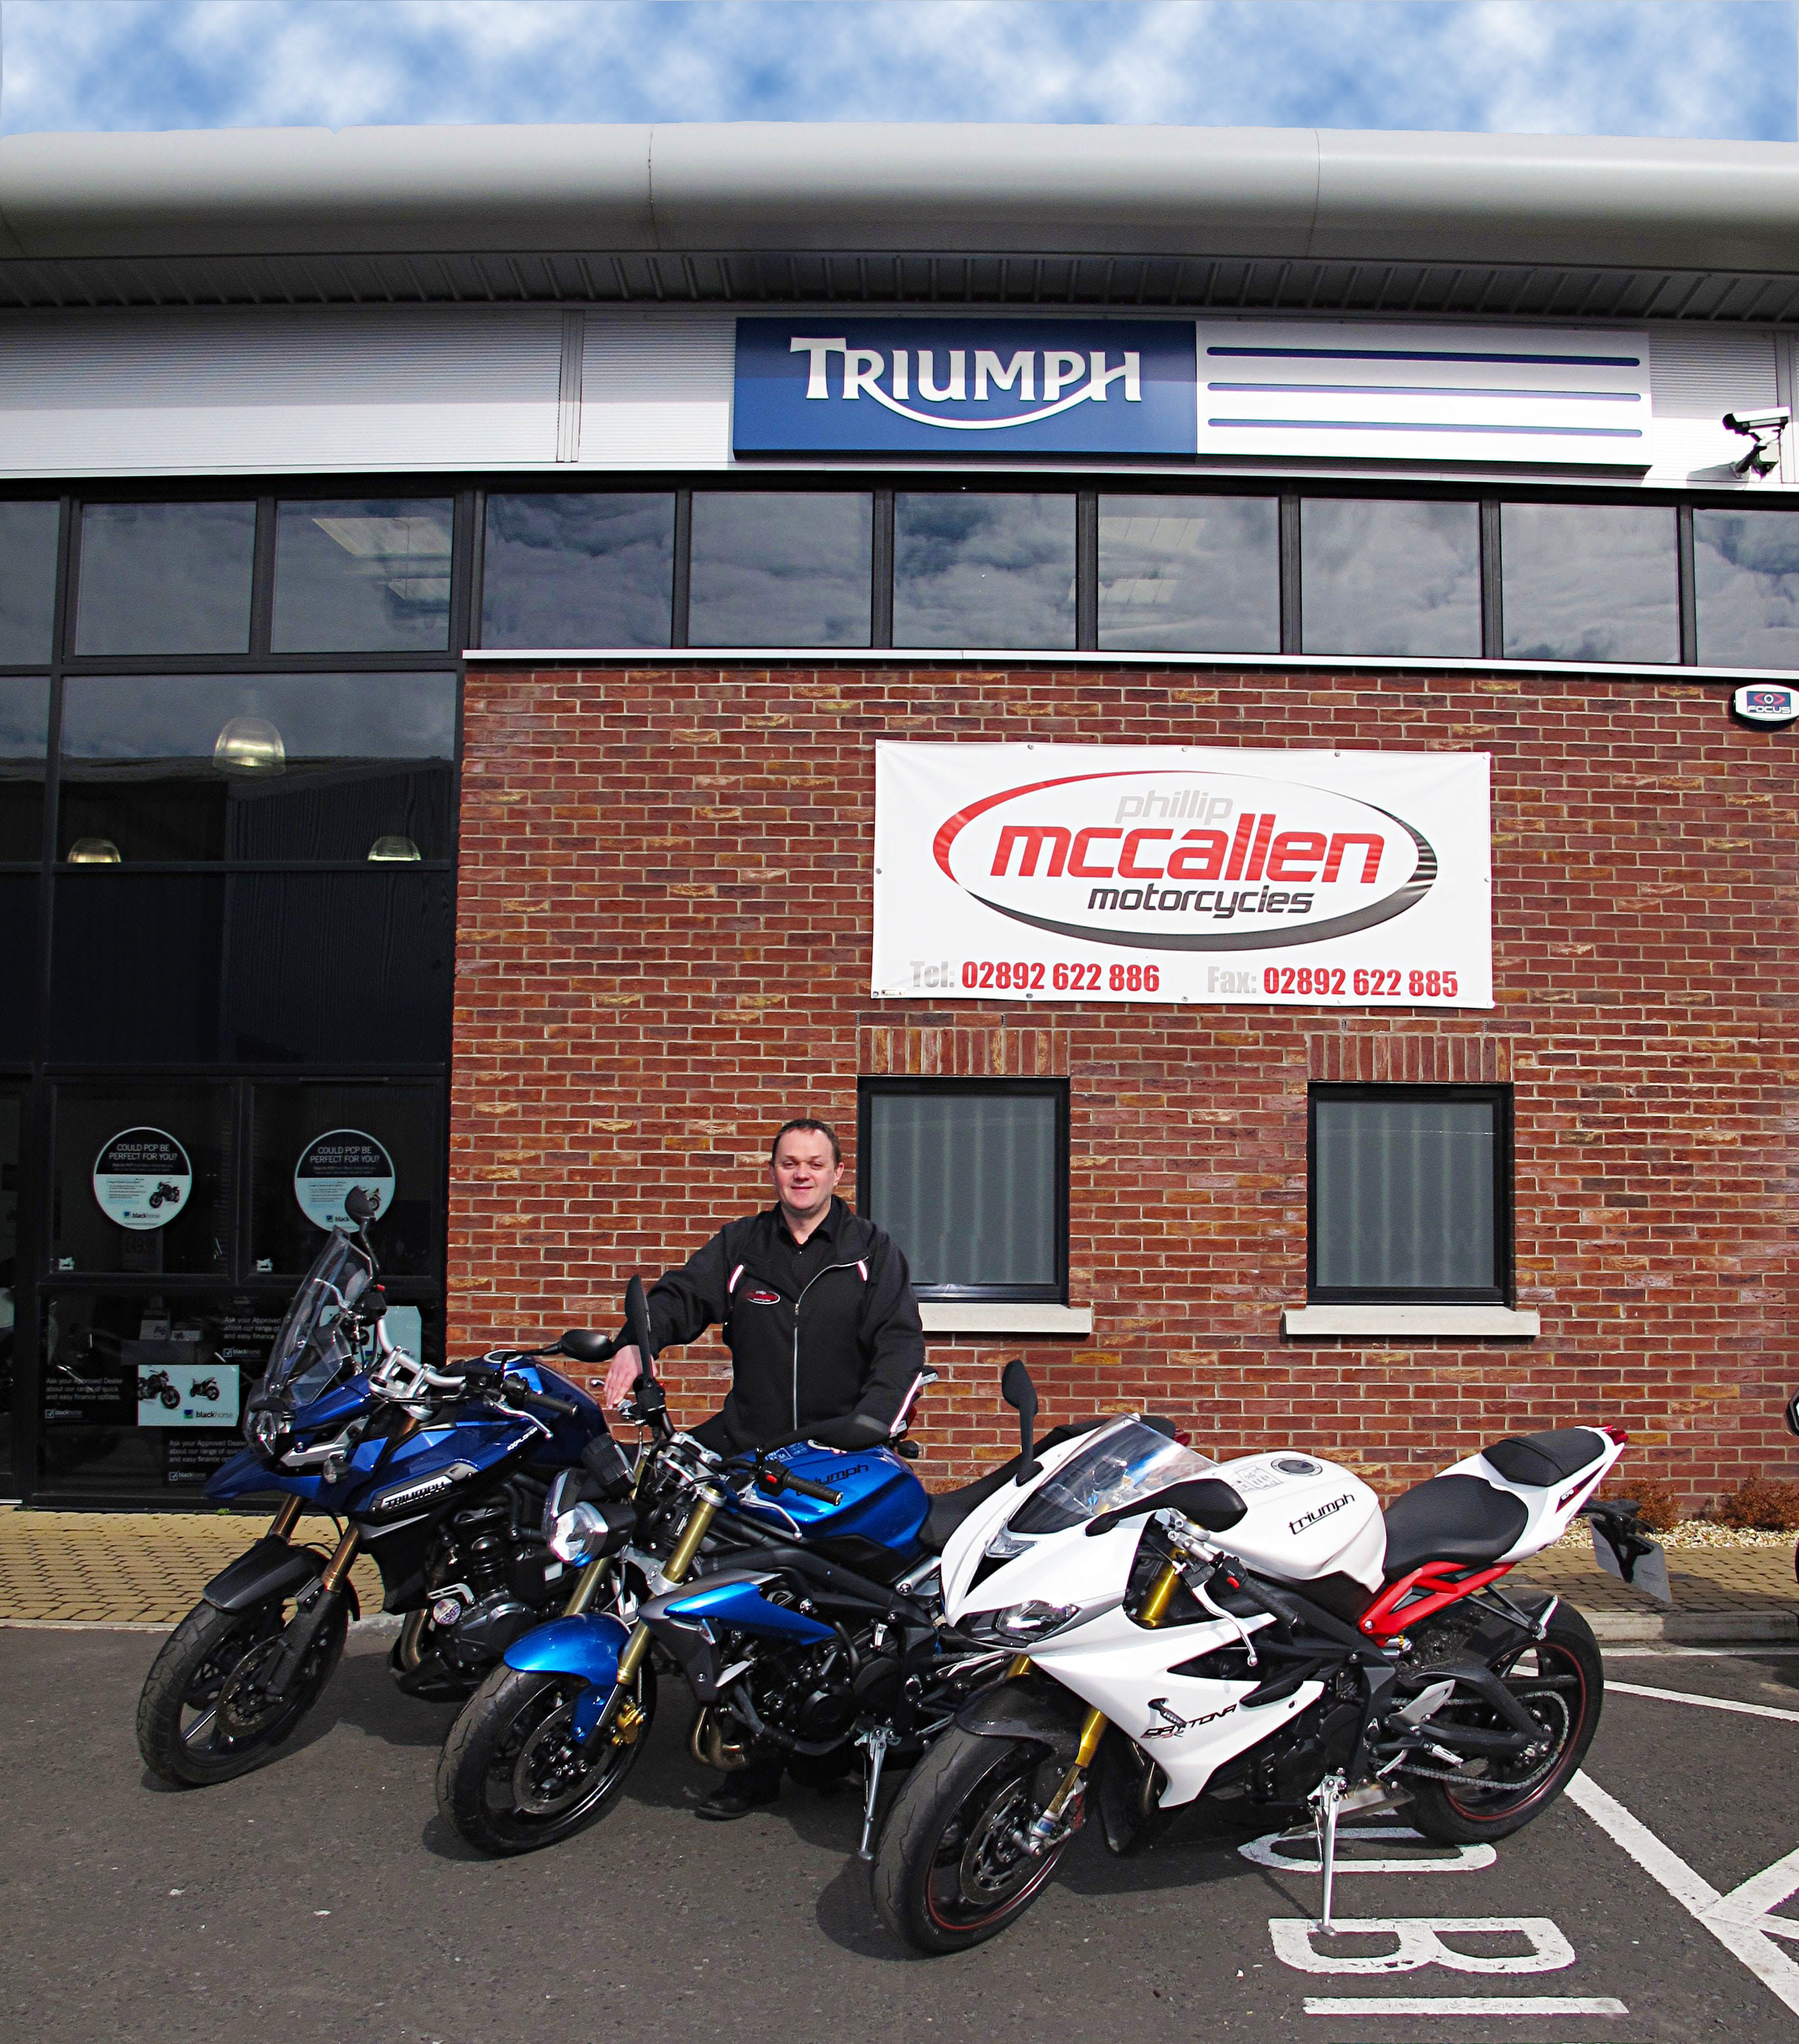 Triumph Philip McCallen Motorcycles